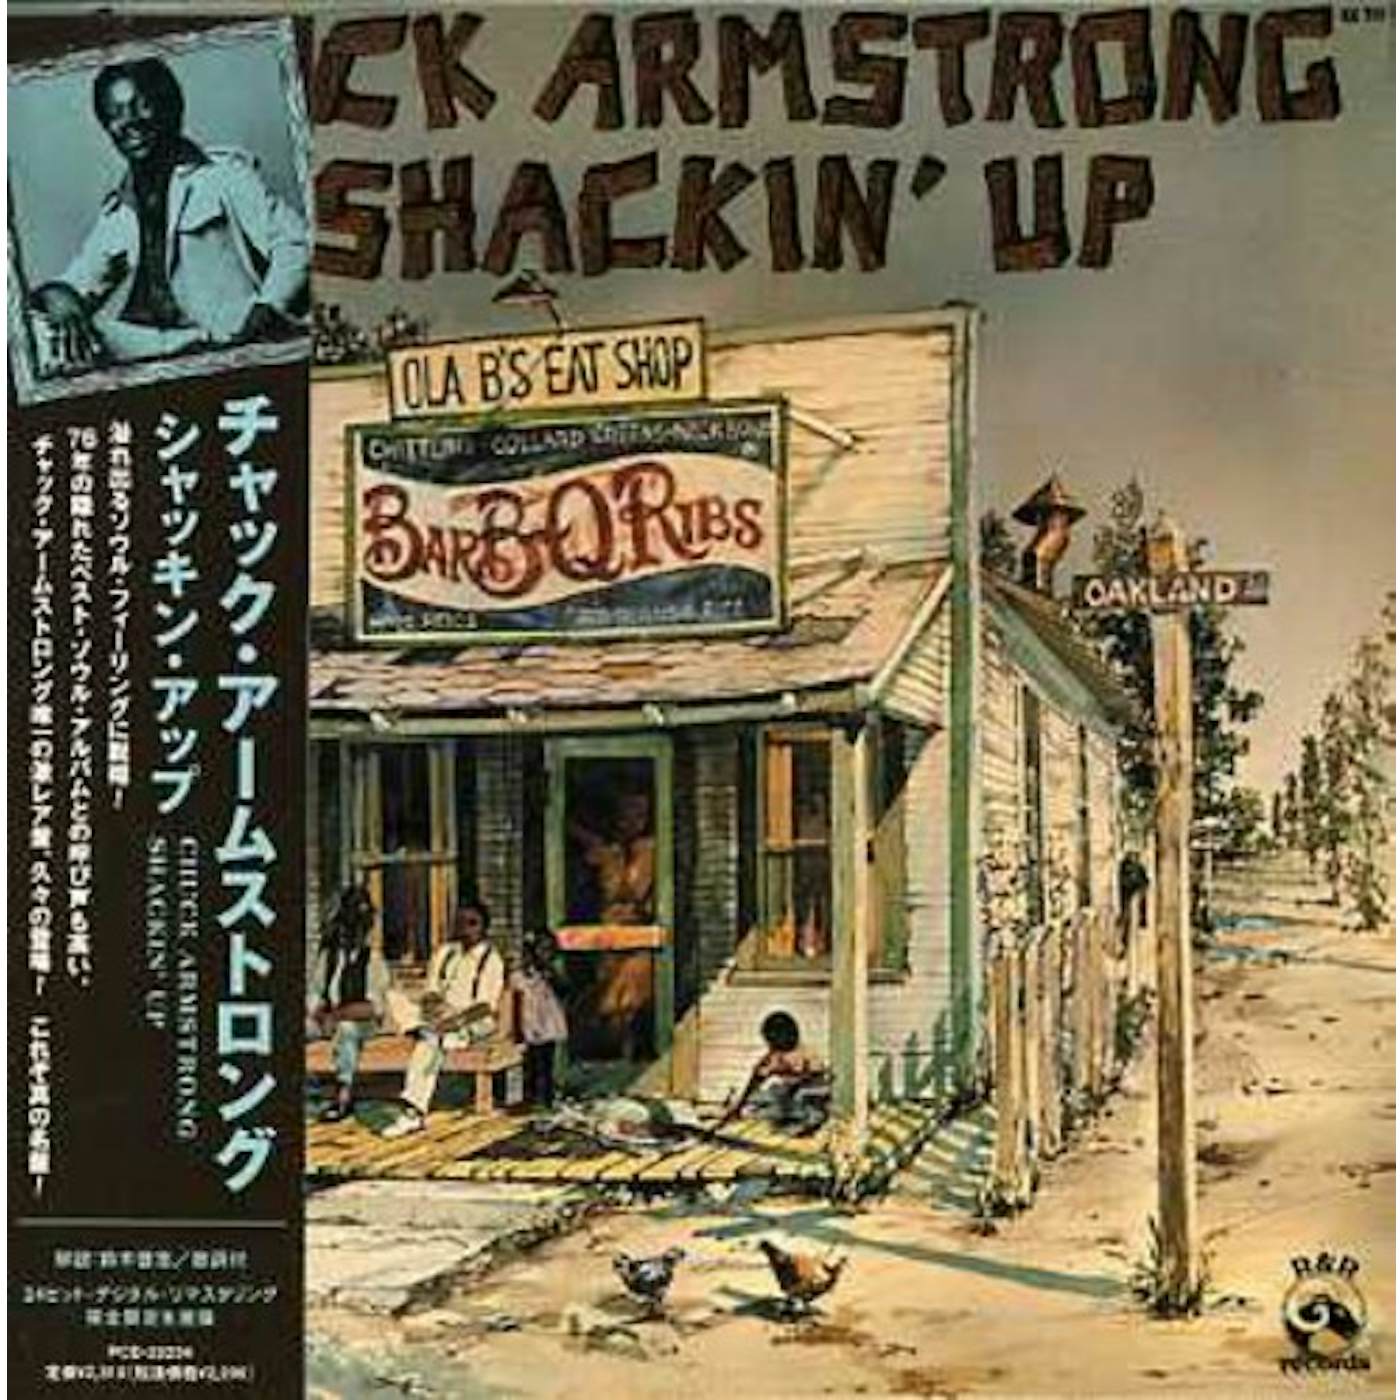 Chuck Armstrong SHACKIN' UP CD